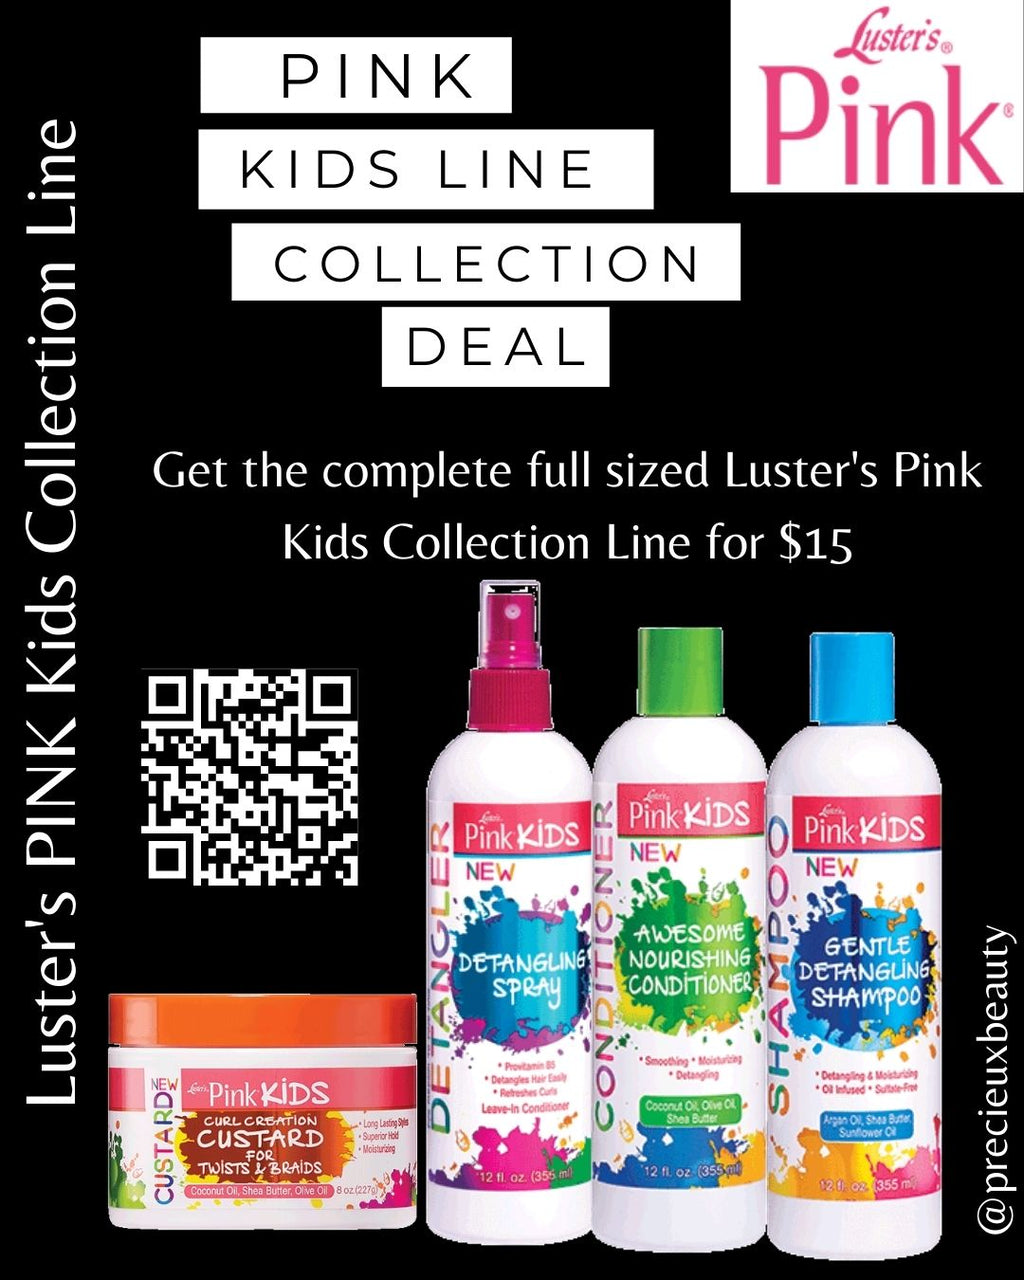 Pink® Kids Curl Creation Custard Twists & Braids Collection Deal